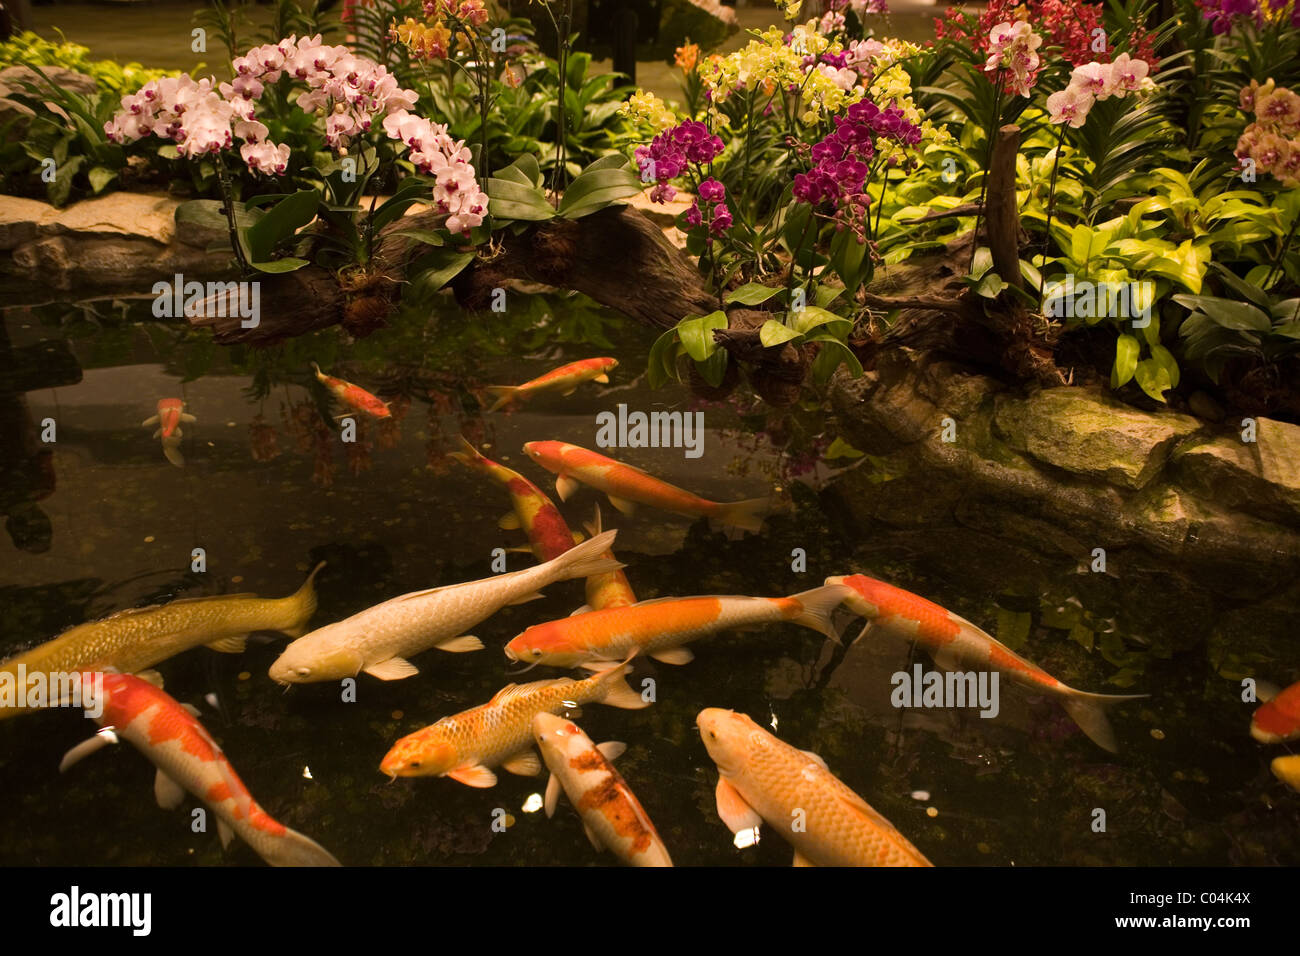 Singapore Changi airport fishpond Stock Photo